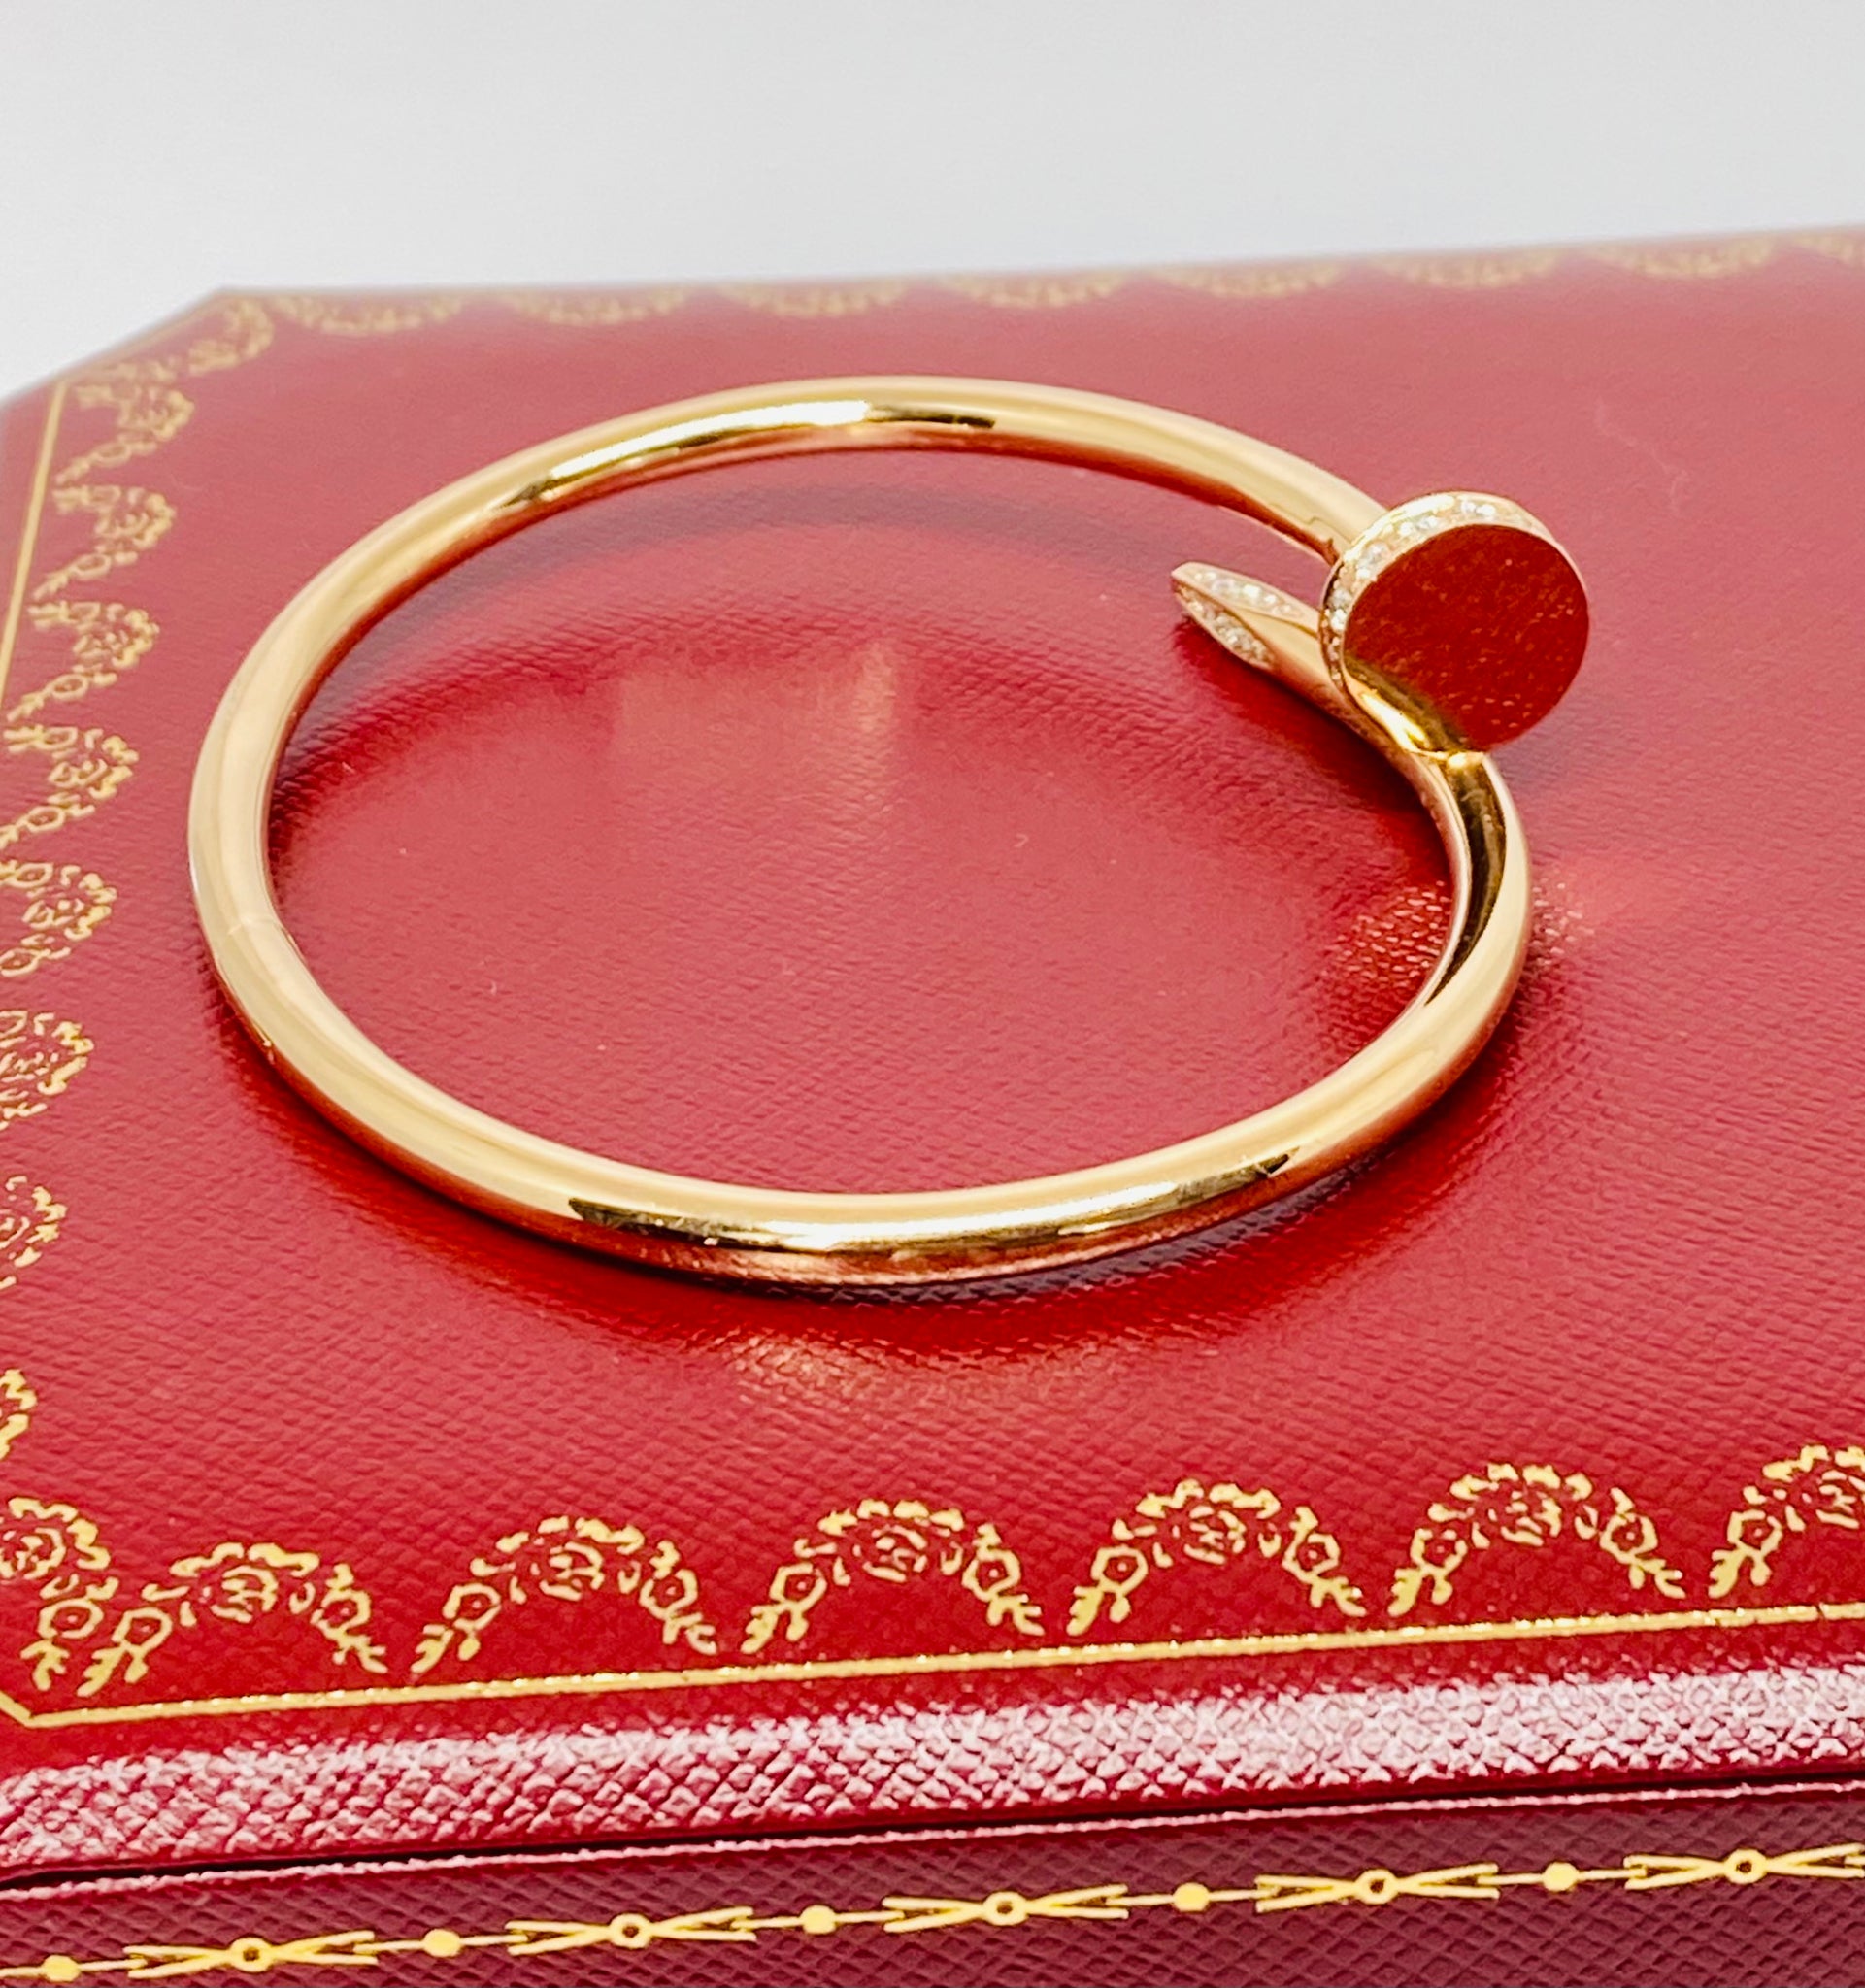 Cartier 18K Yellow Gold White Leather Love Bracelet | eBay